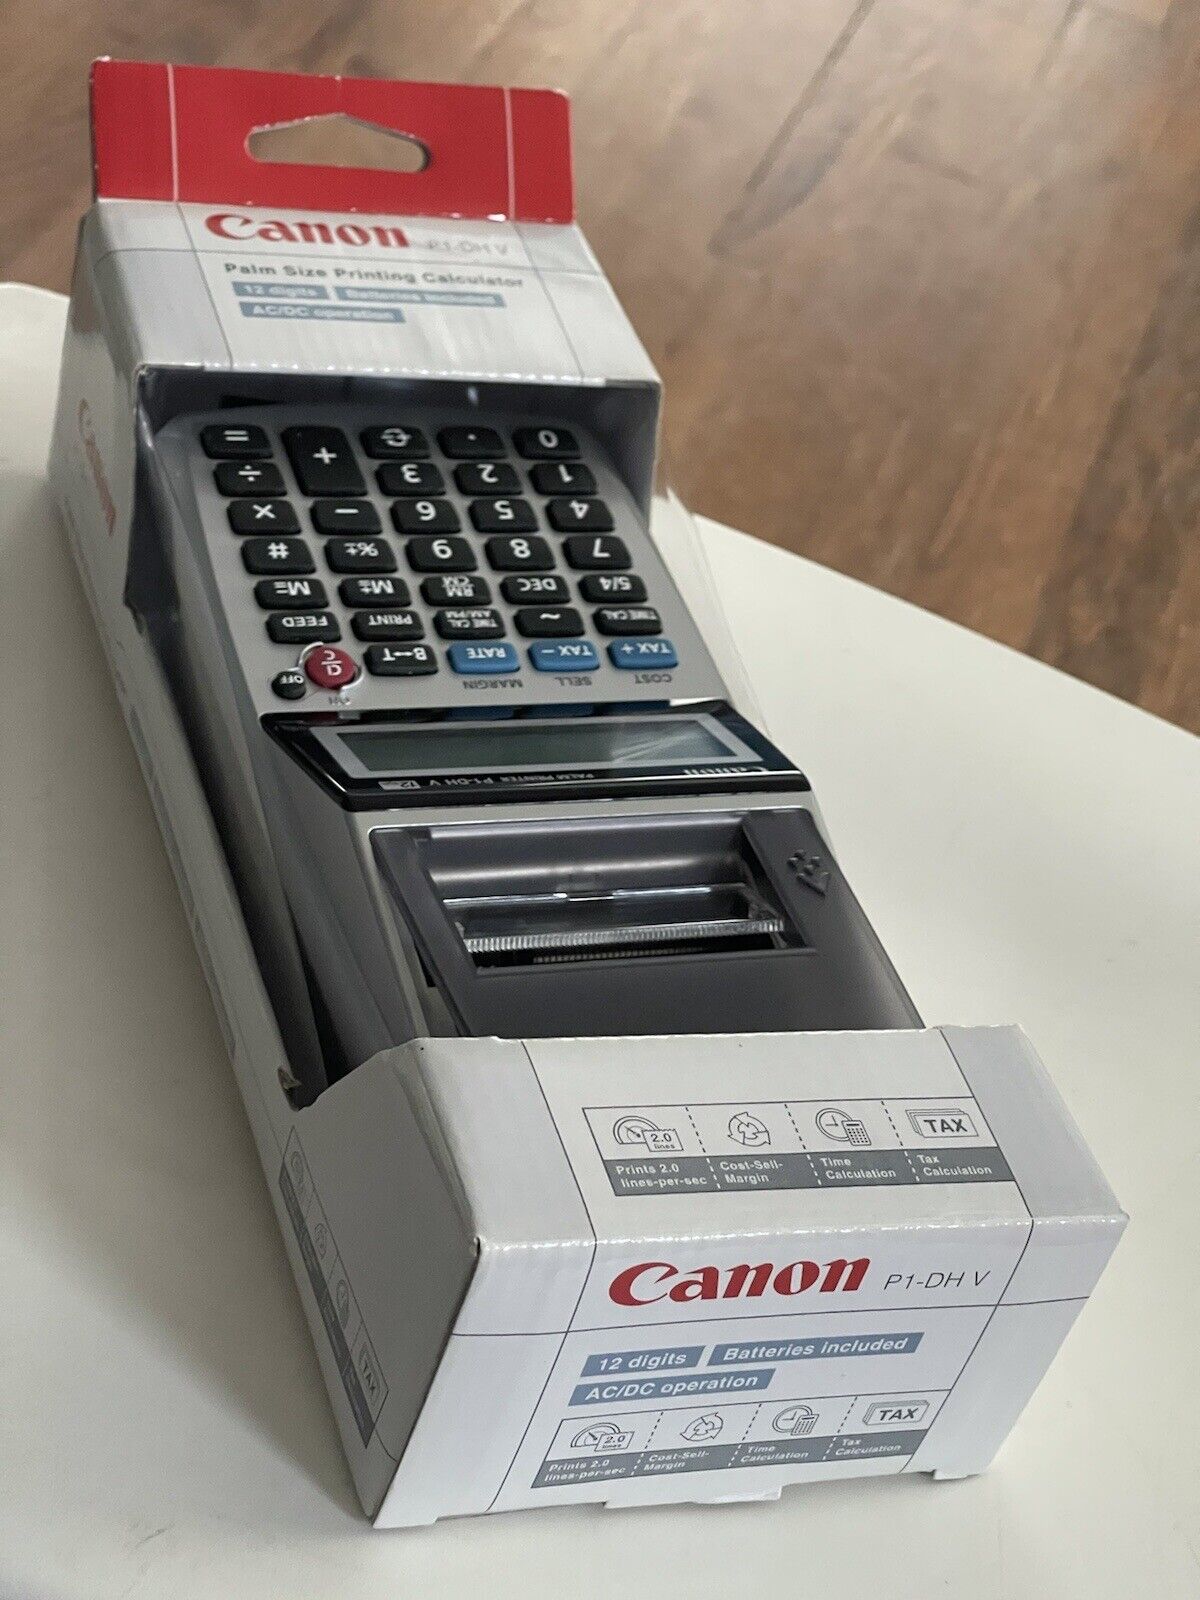 Canon Palm Printer P1-DH V Silver/Black 12-Digit Large Display Print Calculator